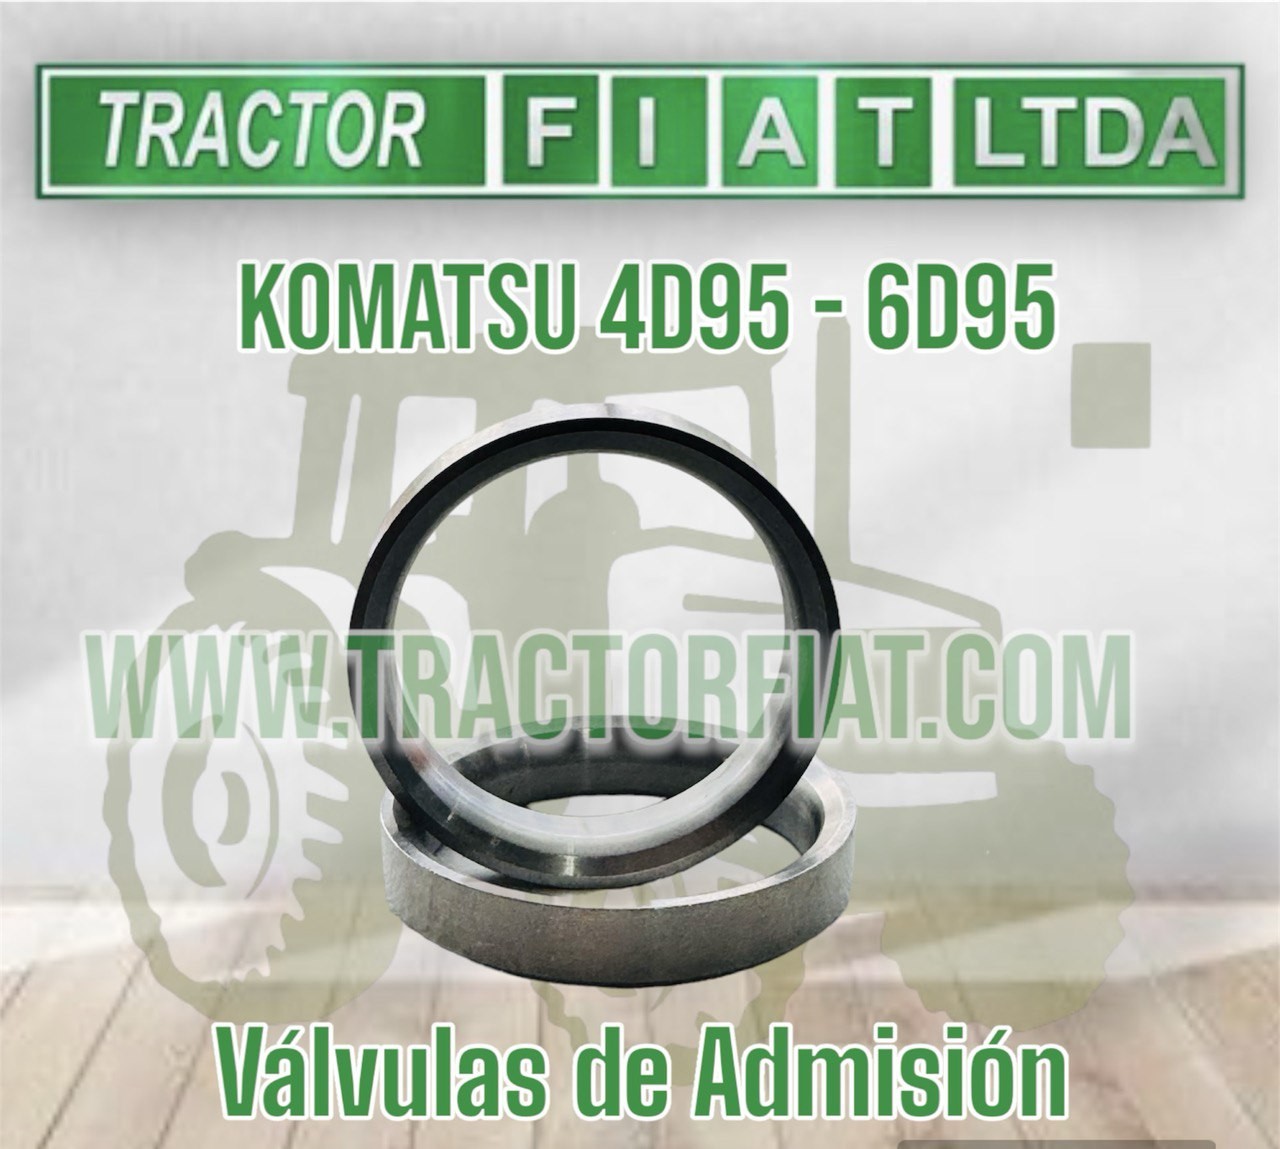 ASIENTO DE VALVULA DE ADMISION - MOTOR KOMATSU  6D95/4D95